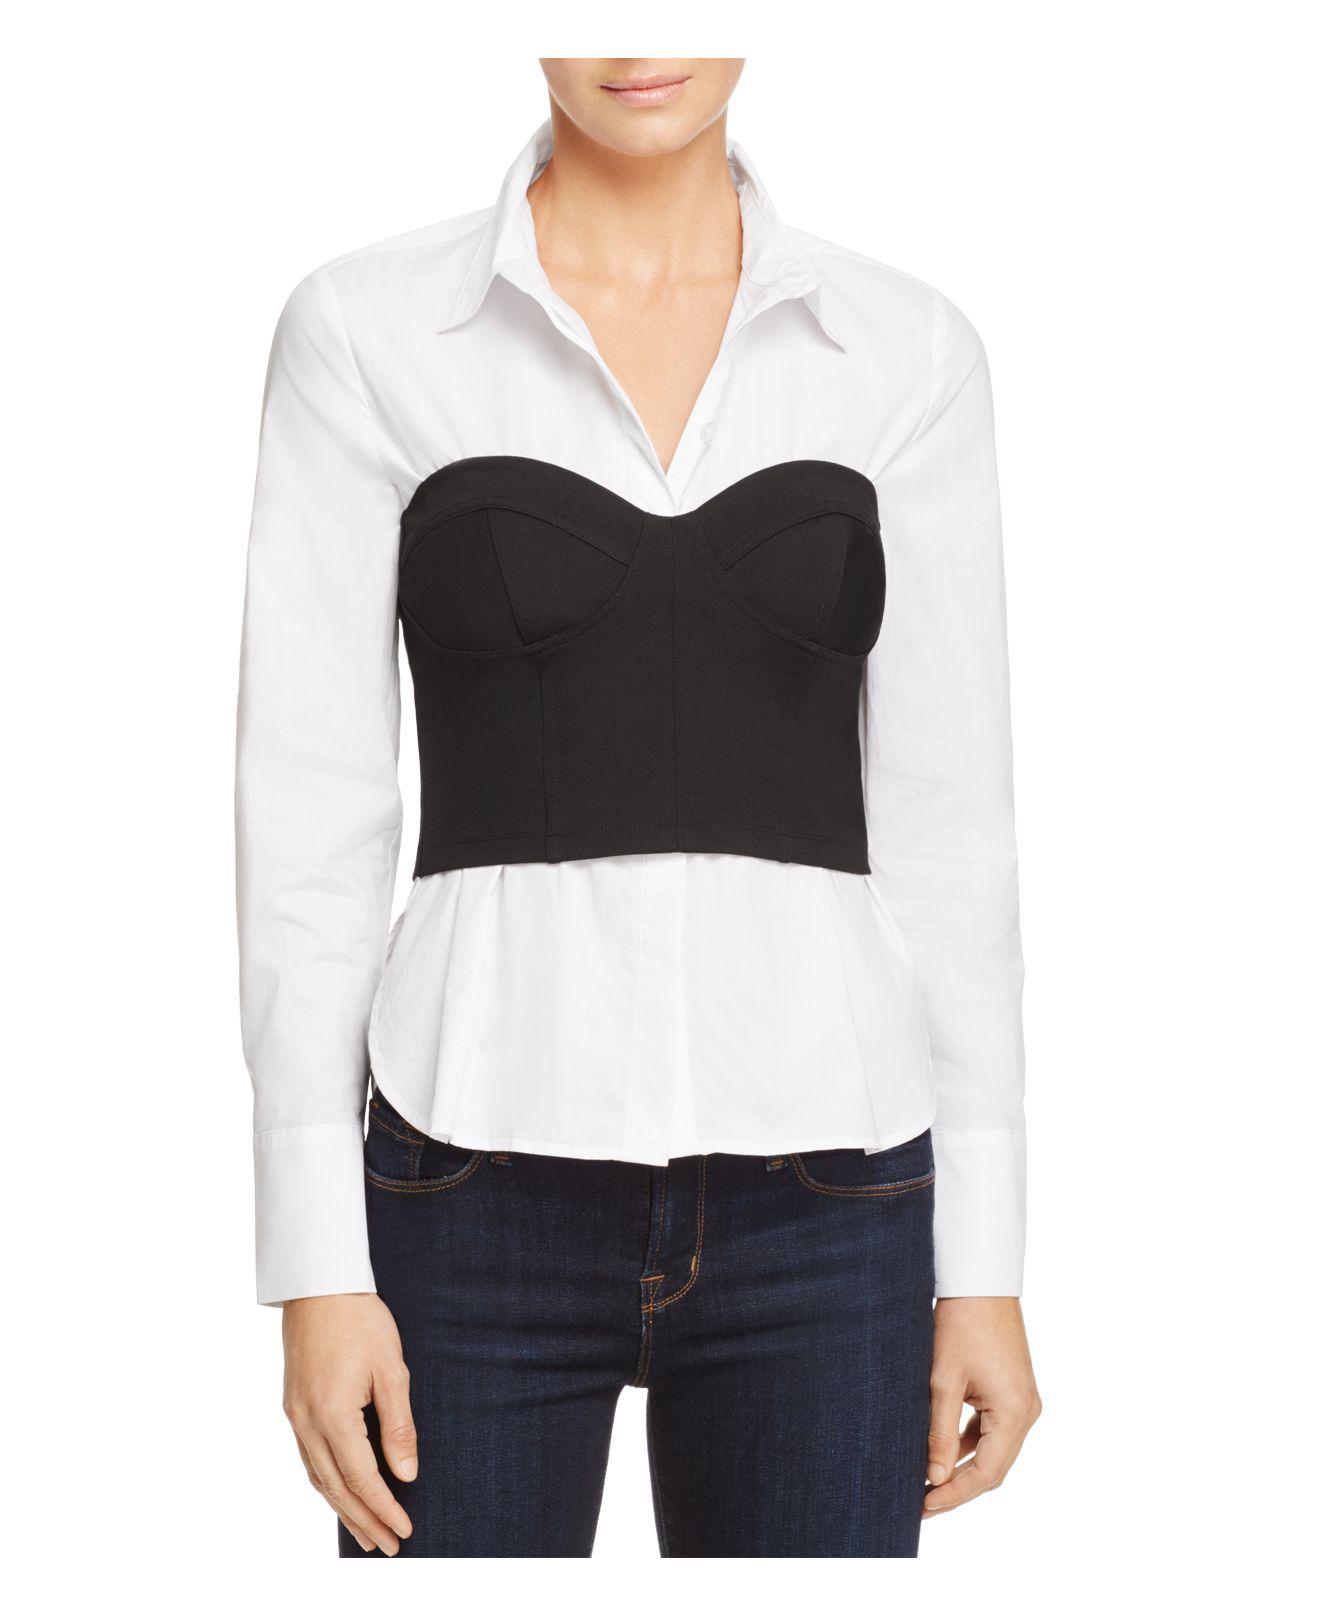 Bardot 2-in-1 Bustier Shirt in White/Black (White) - Lyst